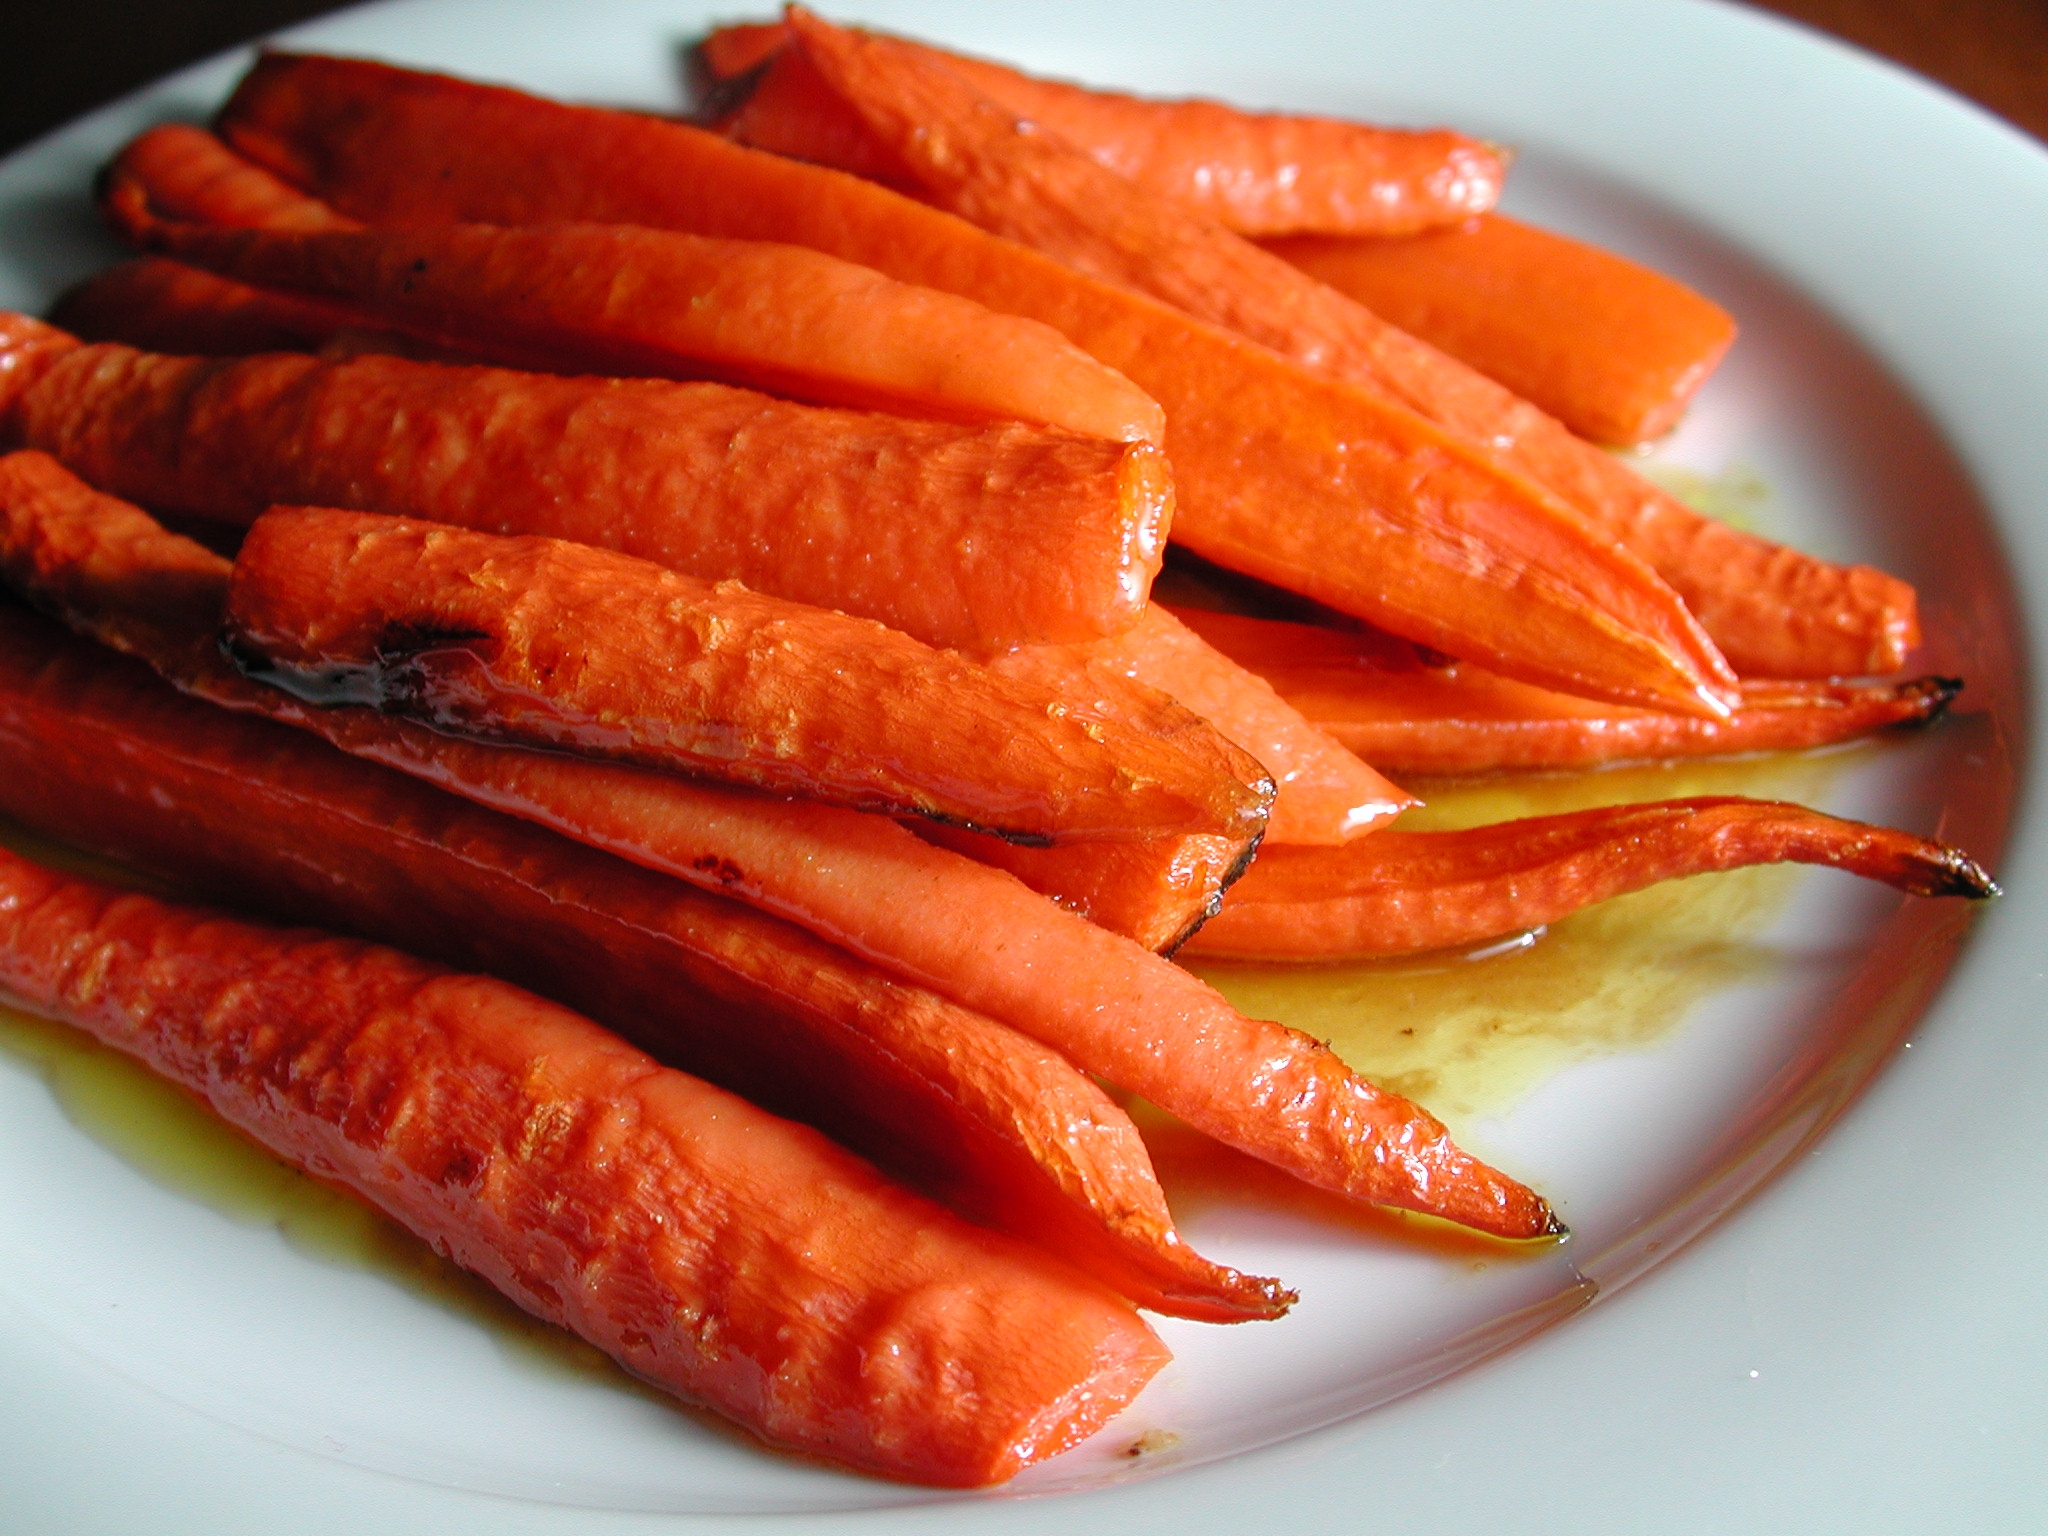 24K Carrots